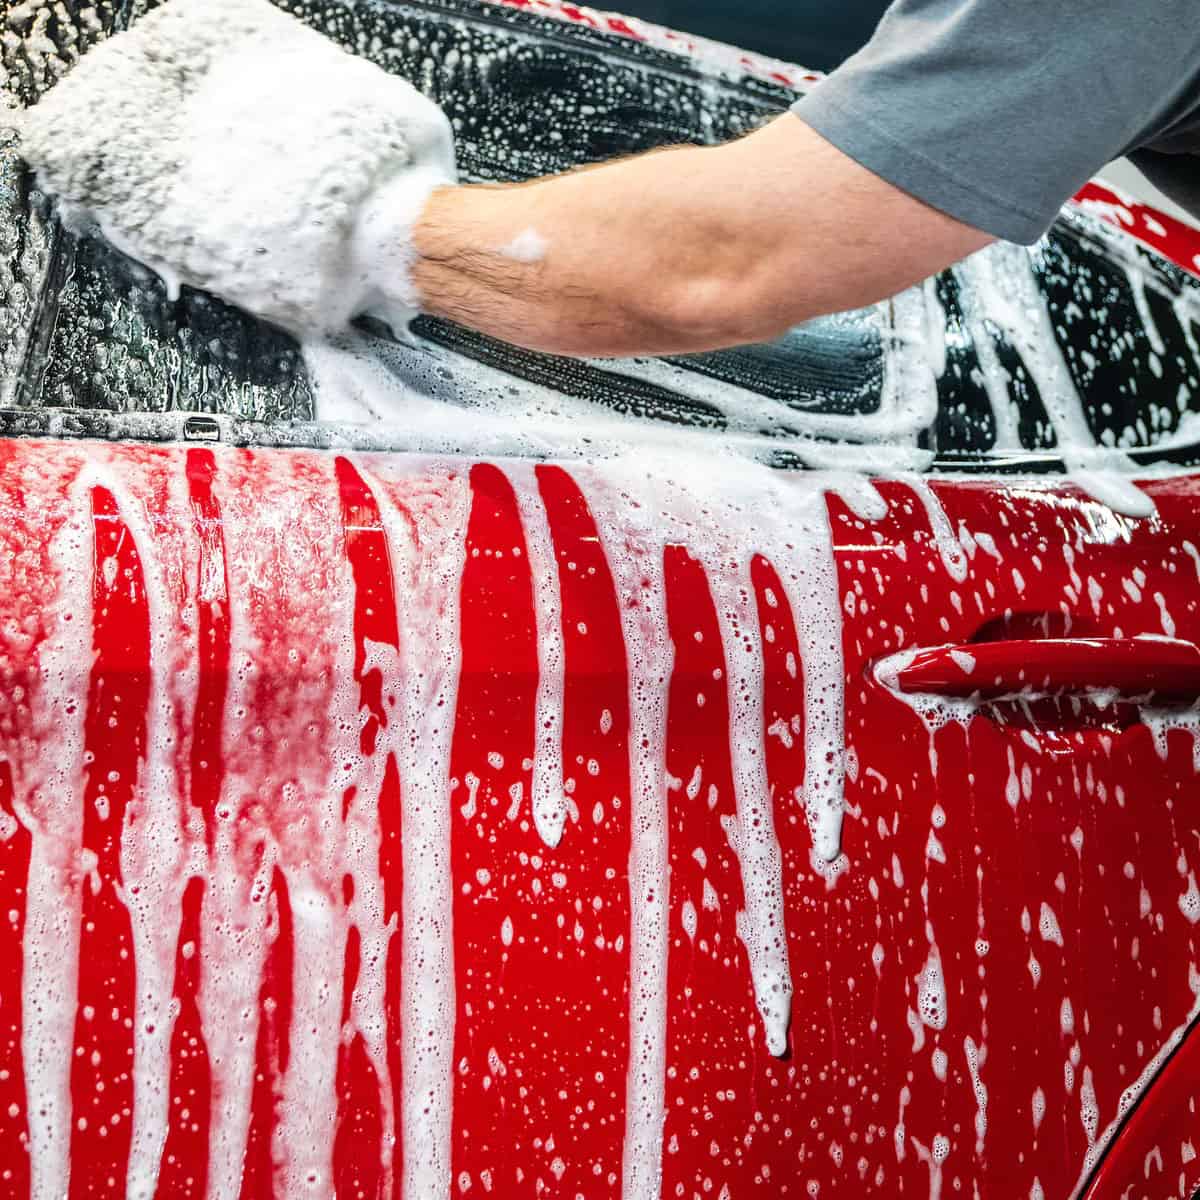 Turtle Wax Zip Wax Concentrated Car Wash Shampoo with Carnauba Wax - 500ml - in action